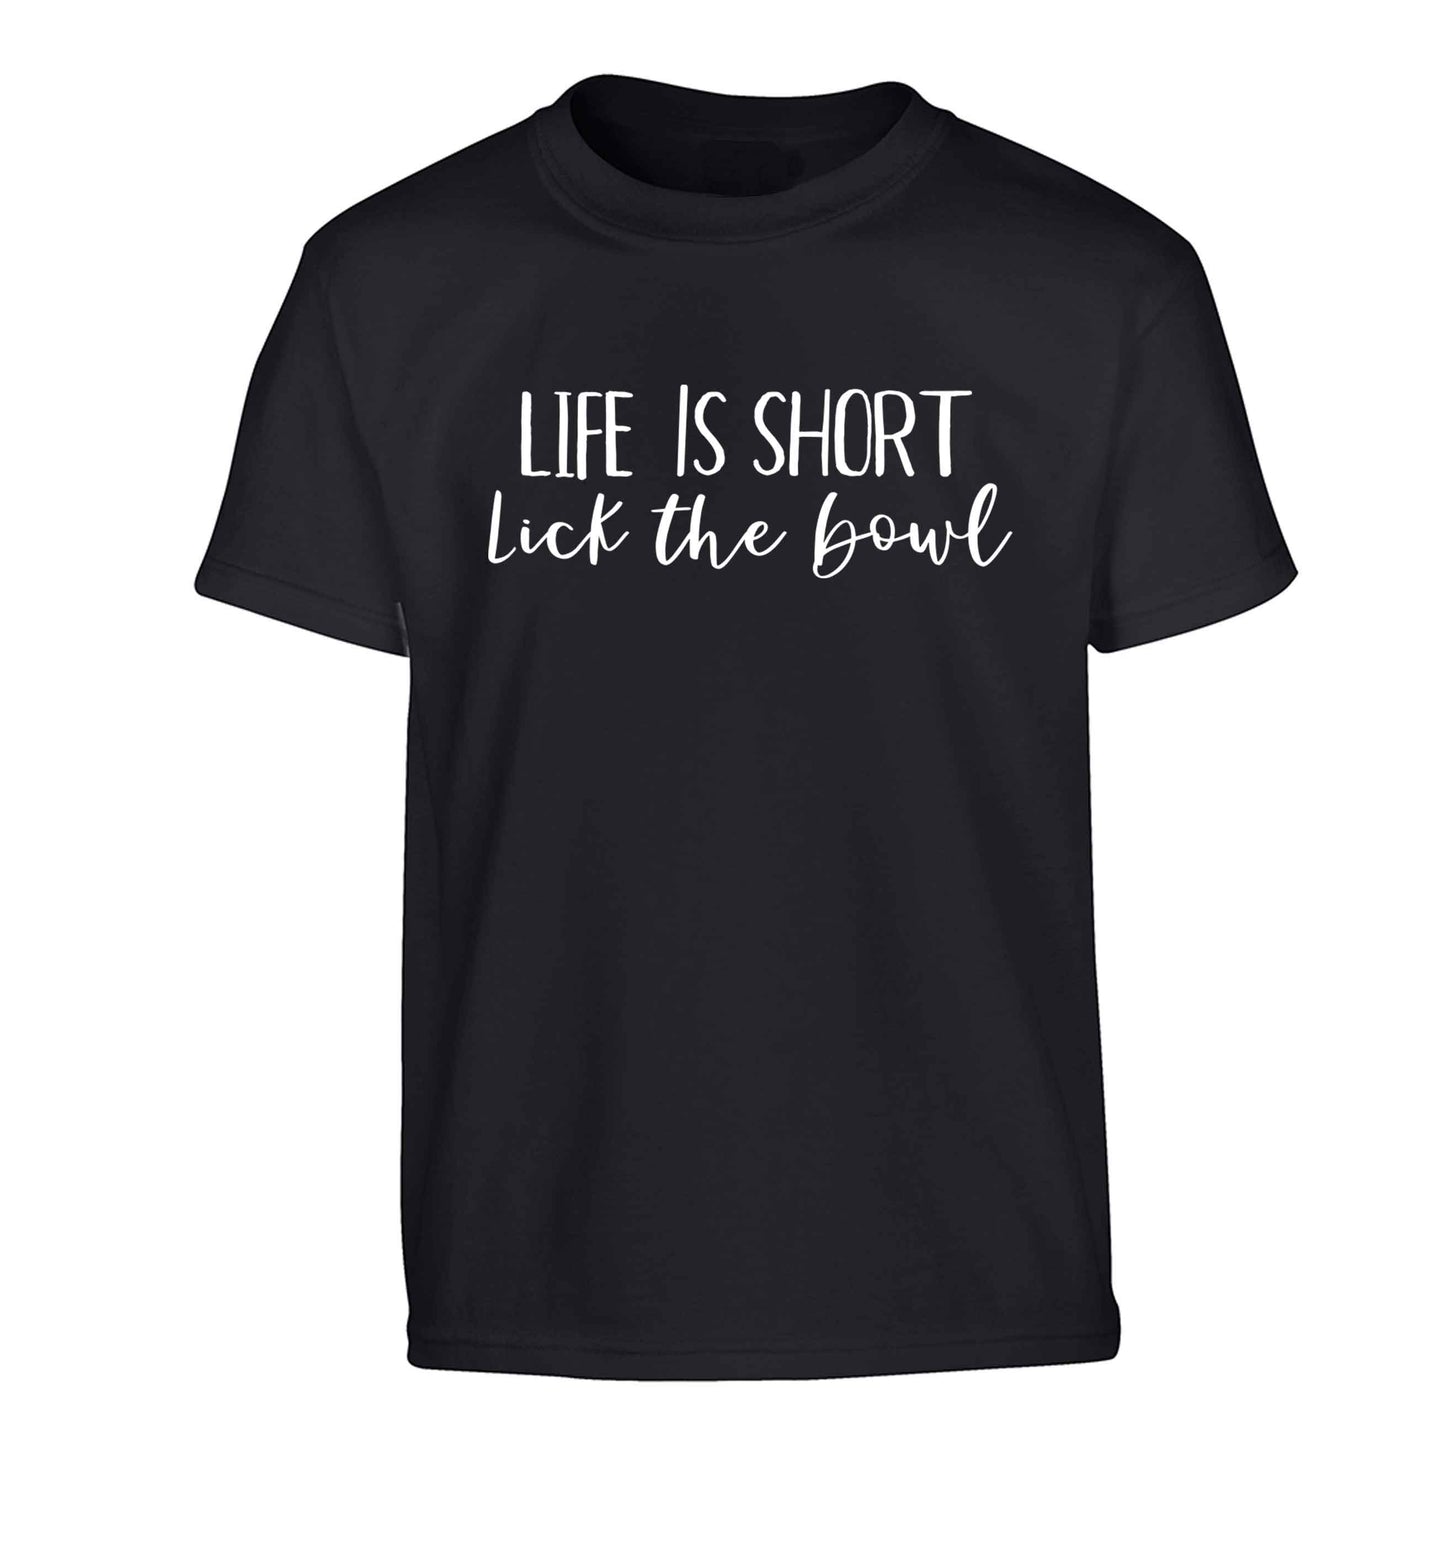 Life is short lick the bowl Children's black Tshirt 12-13 Years